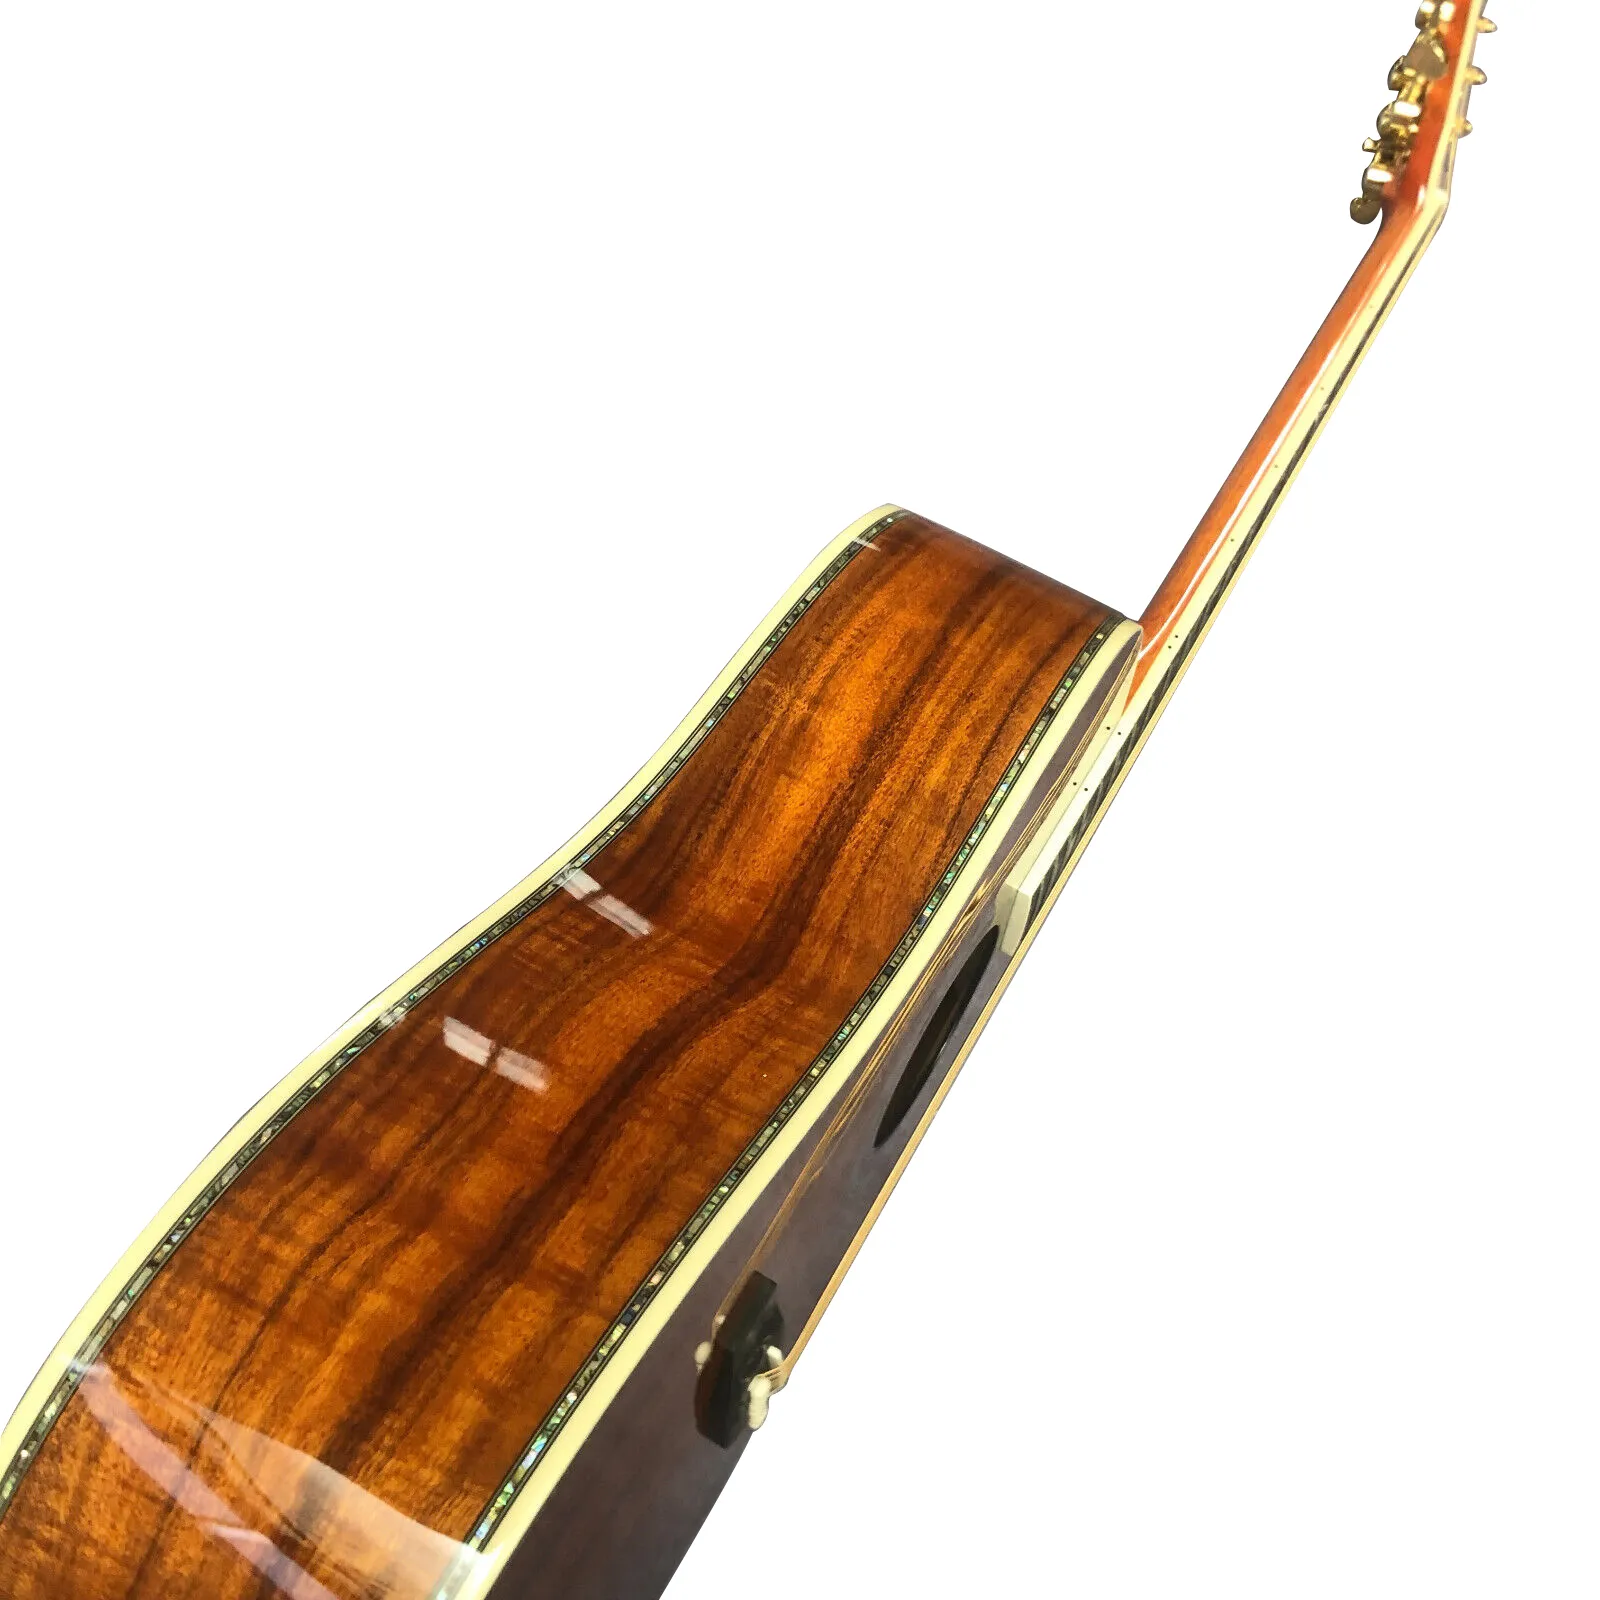 41-inch all-KOA wood ebony fingerboard, abalone inlaid acoustic guitar